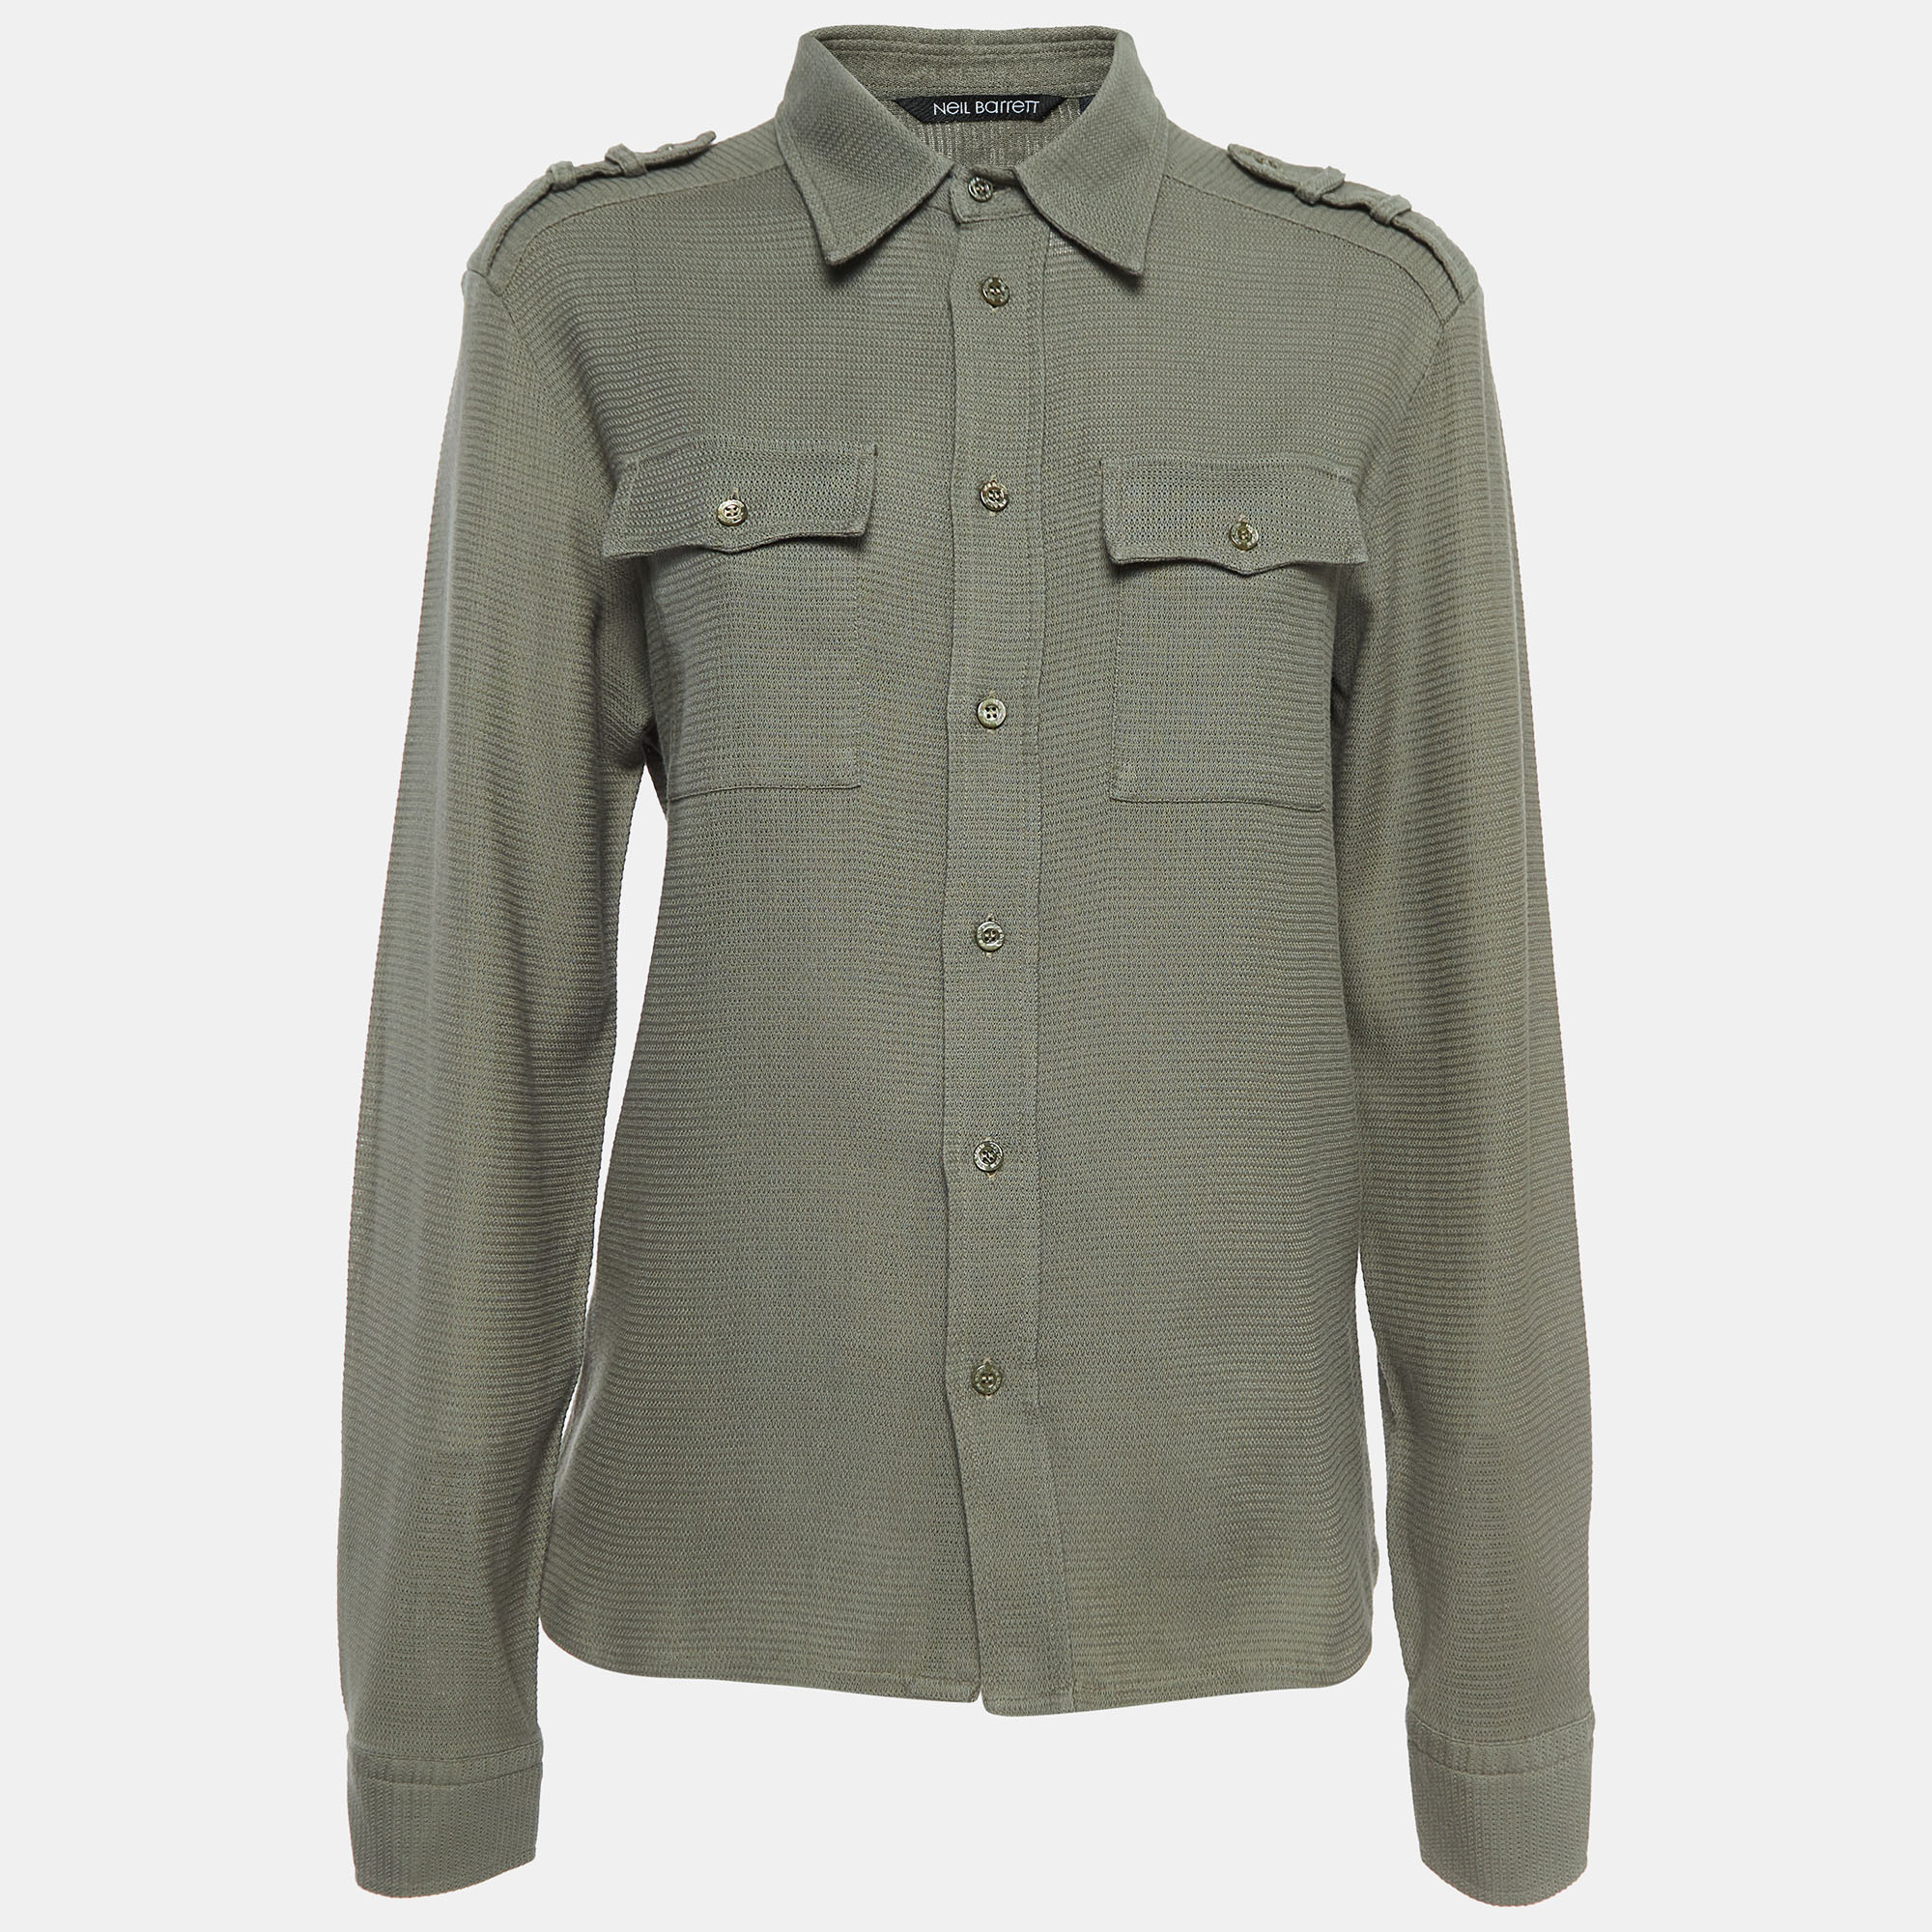 Neil barrett olive green cotton military shirt m